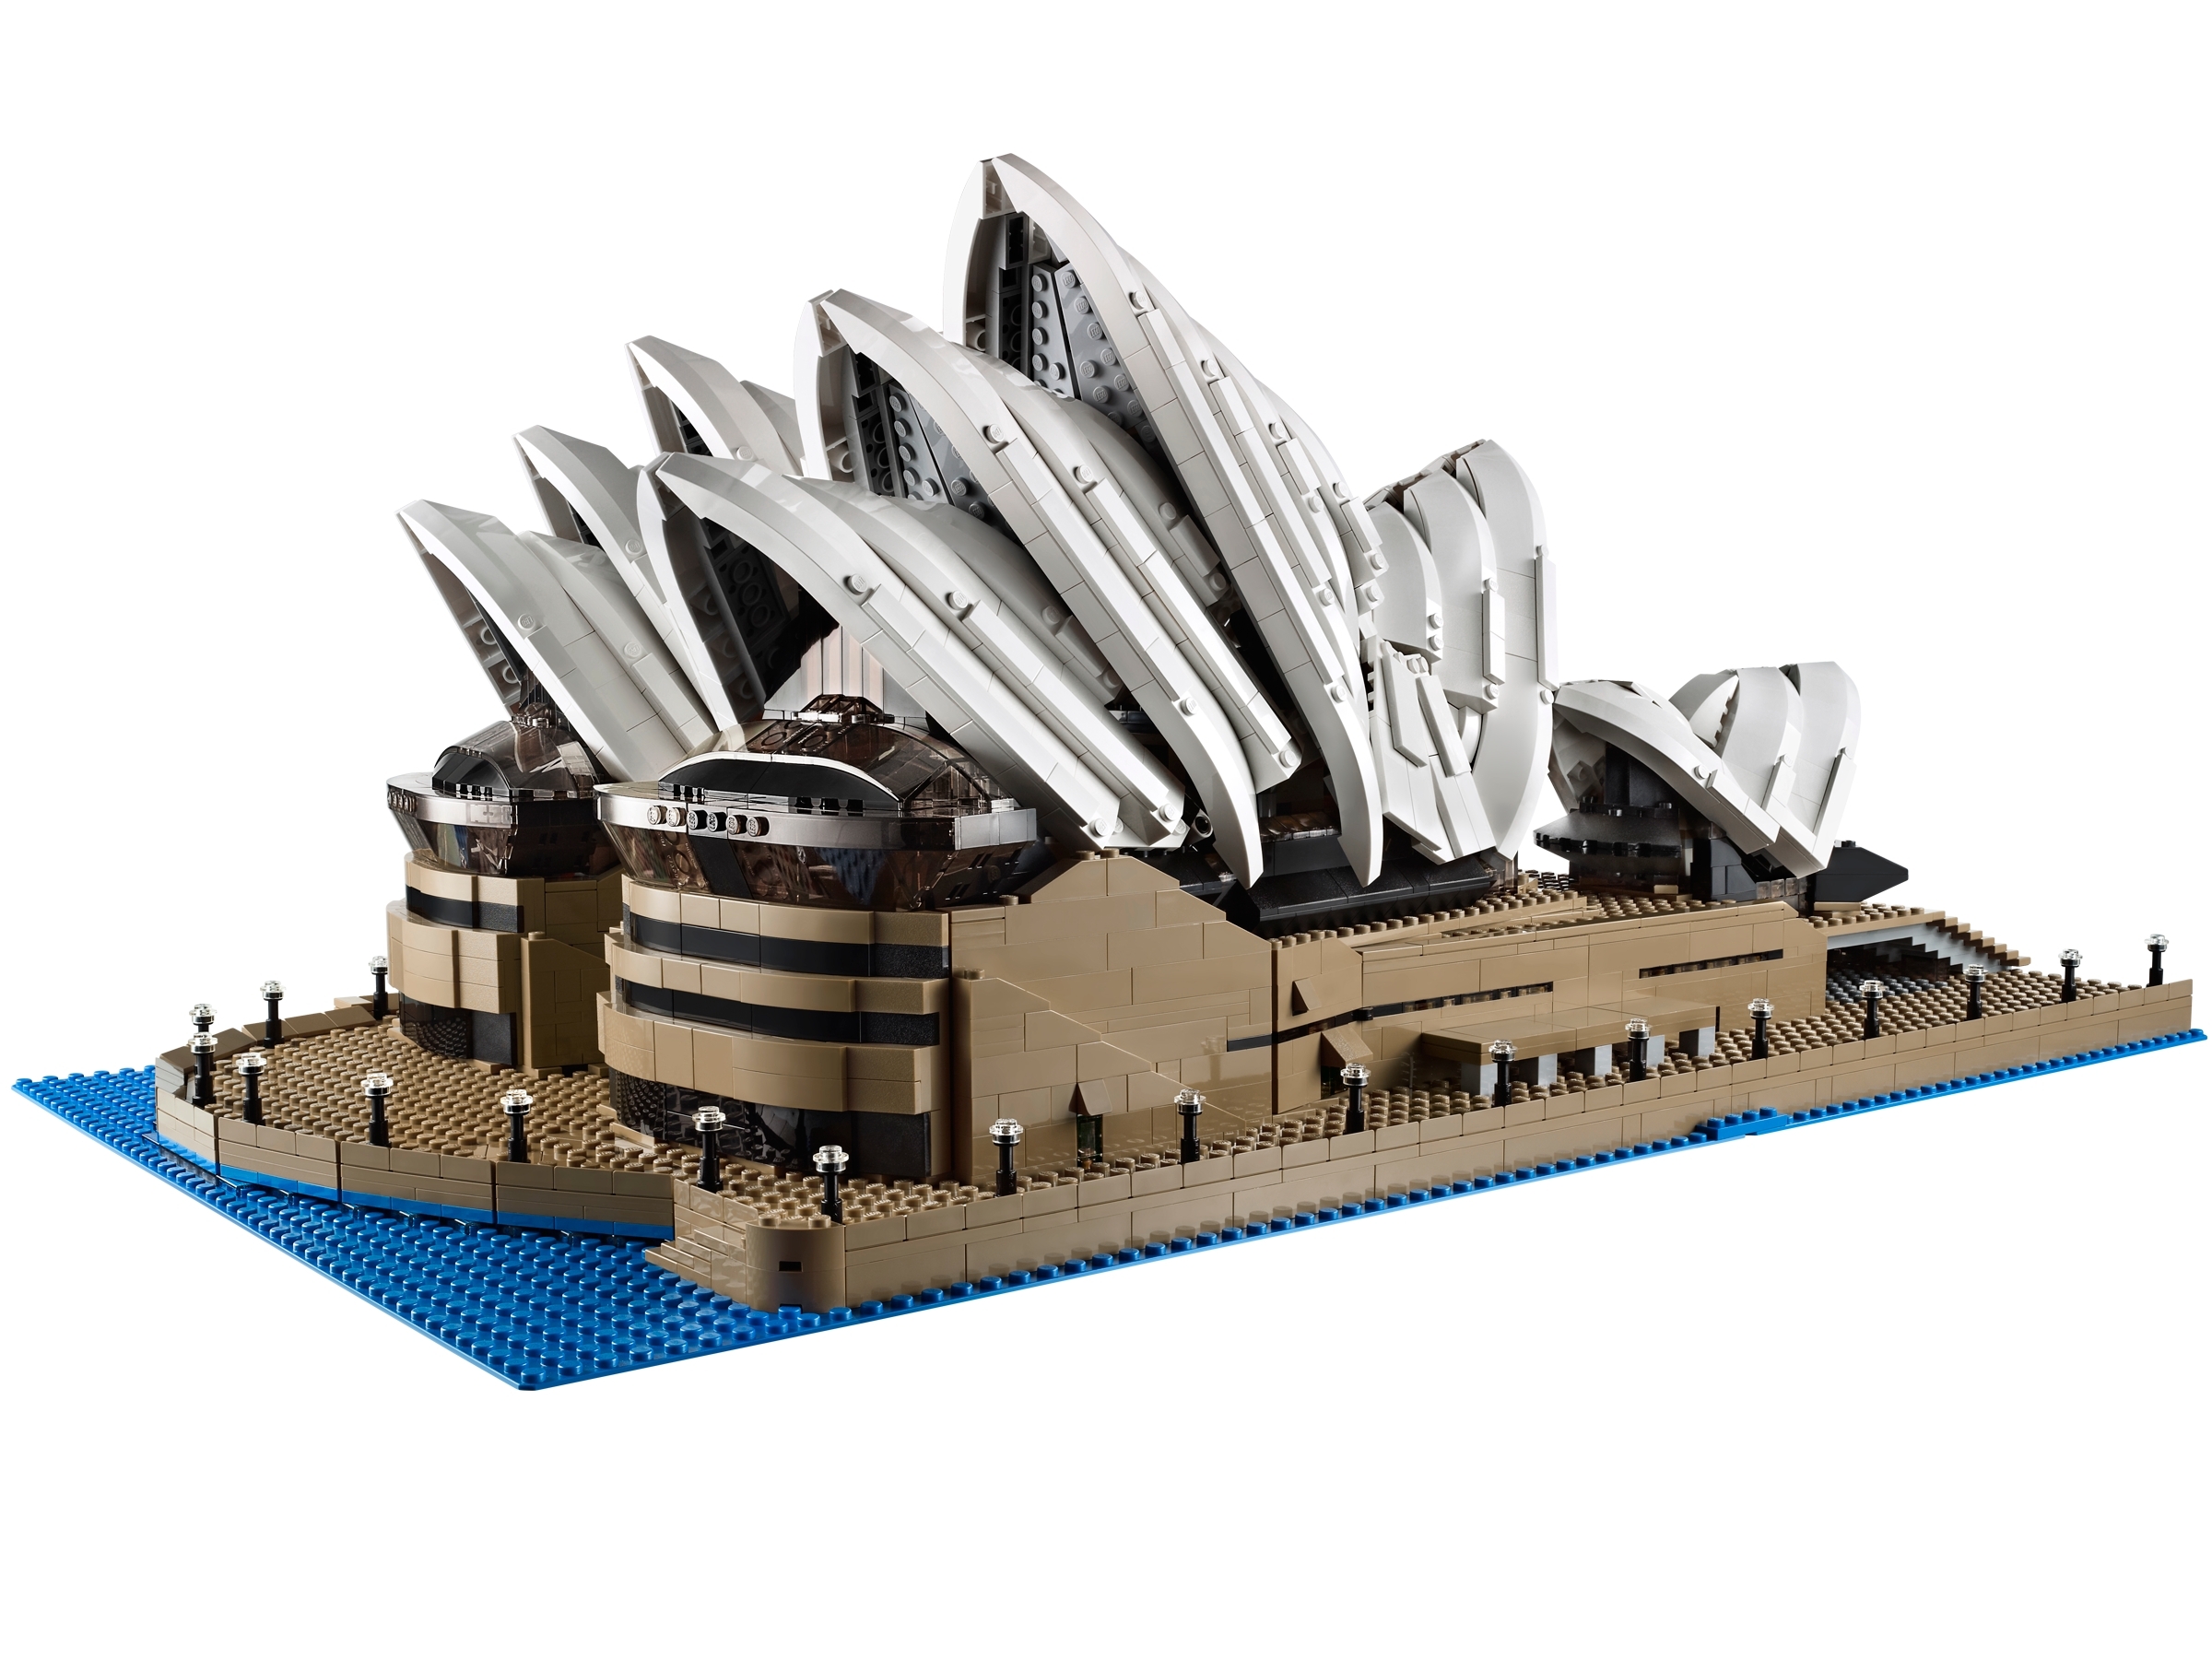 lego creator sydney opera house